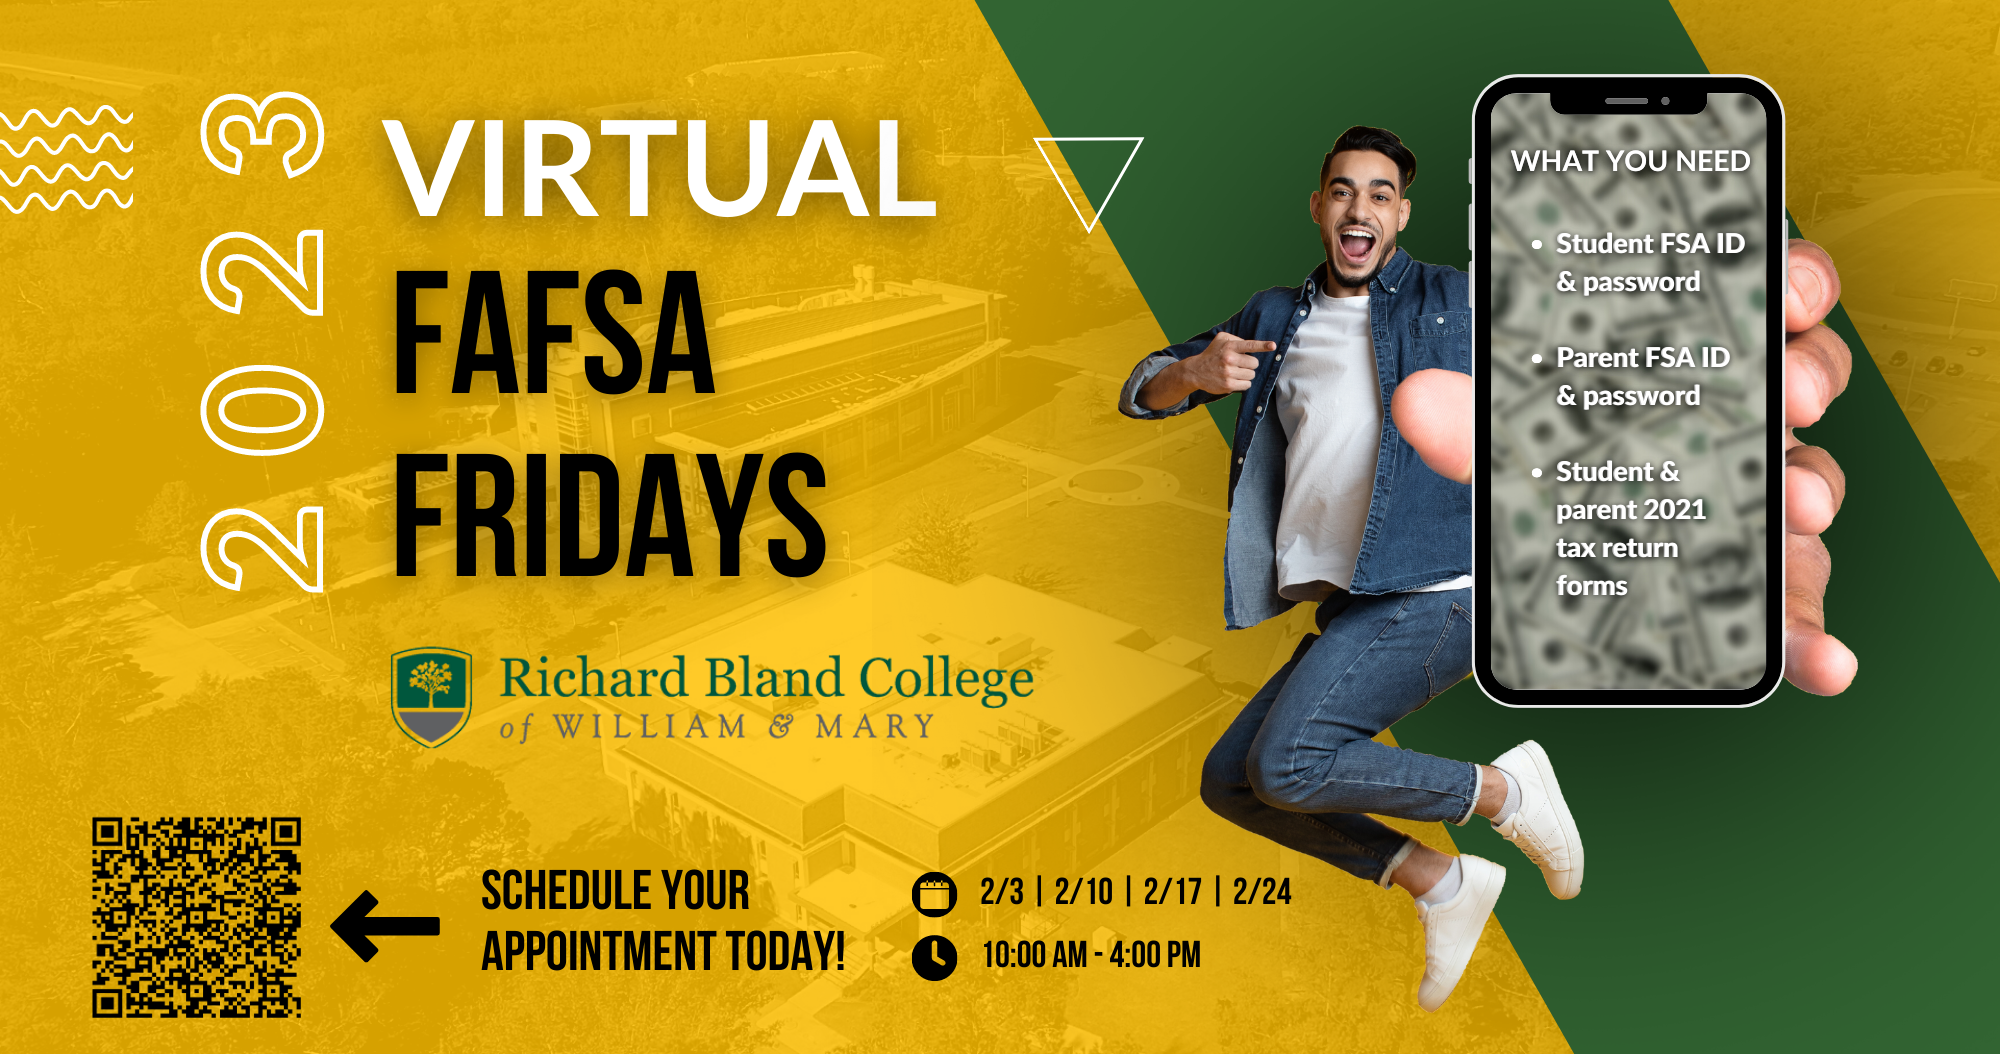 RBC Virtual FAFSA Fridays